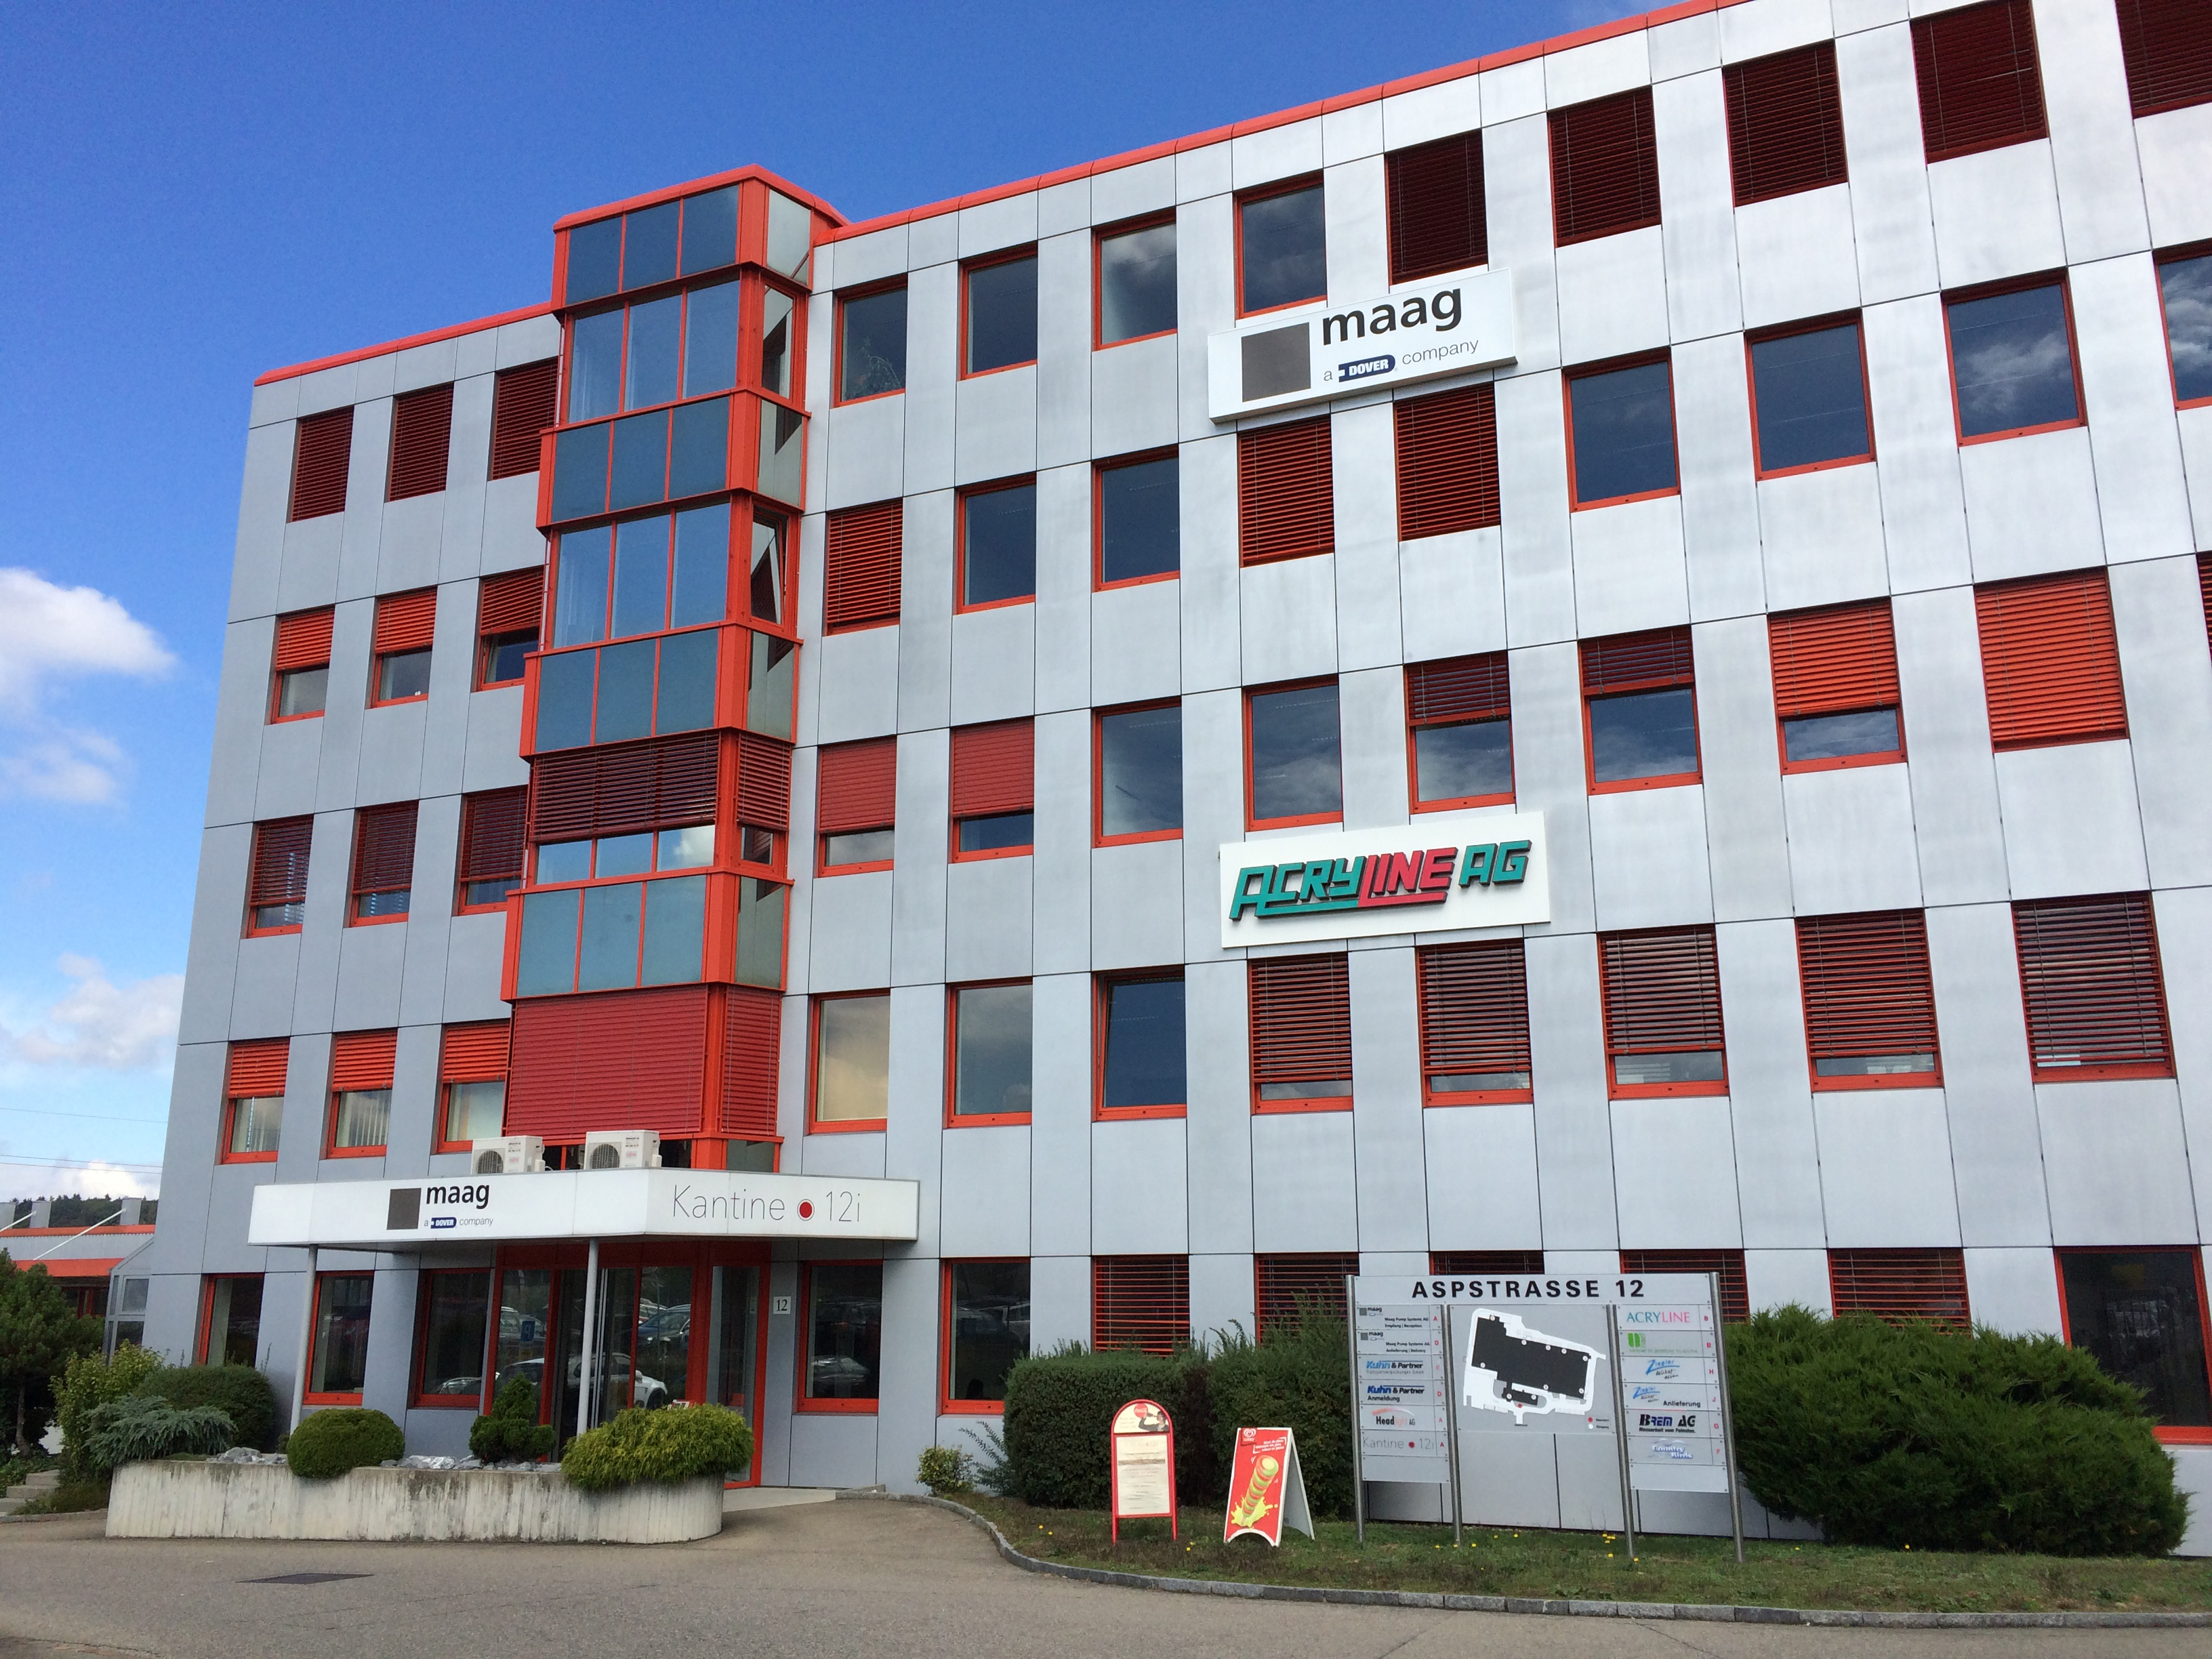 Maag’s corporate headquarters in Oberglatt, Switzerland.